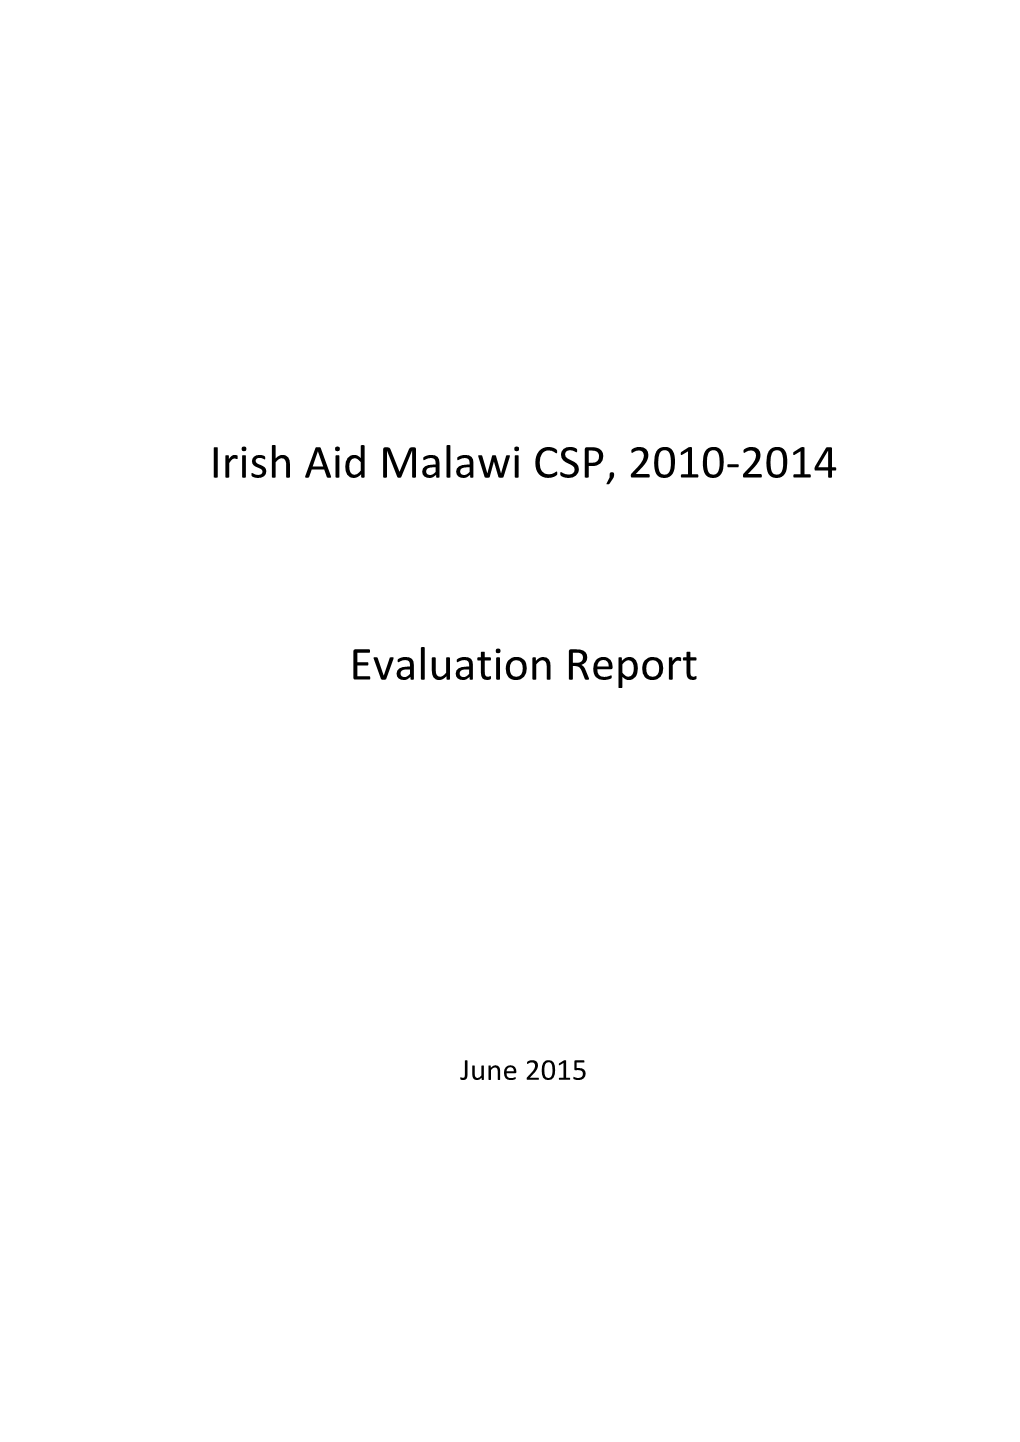 Irish Aid Malawi CSP, 2010-2014 Evaluation Report